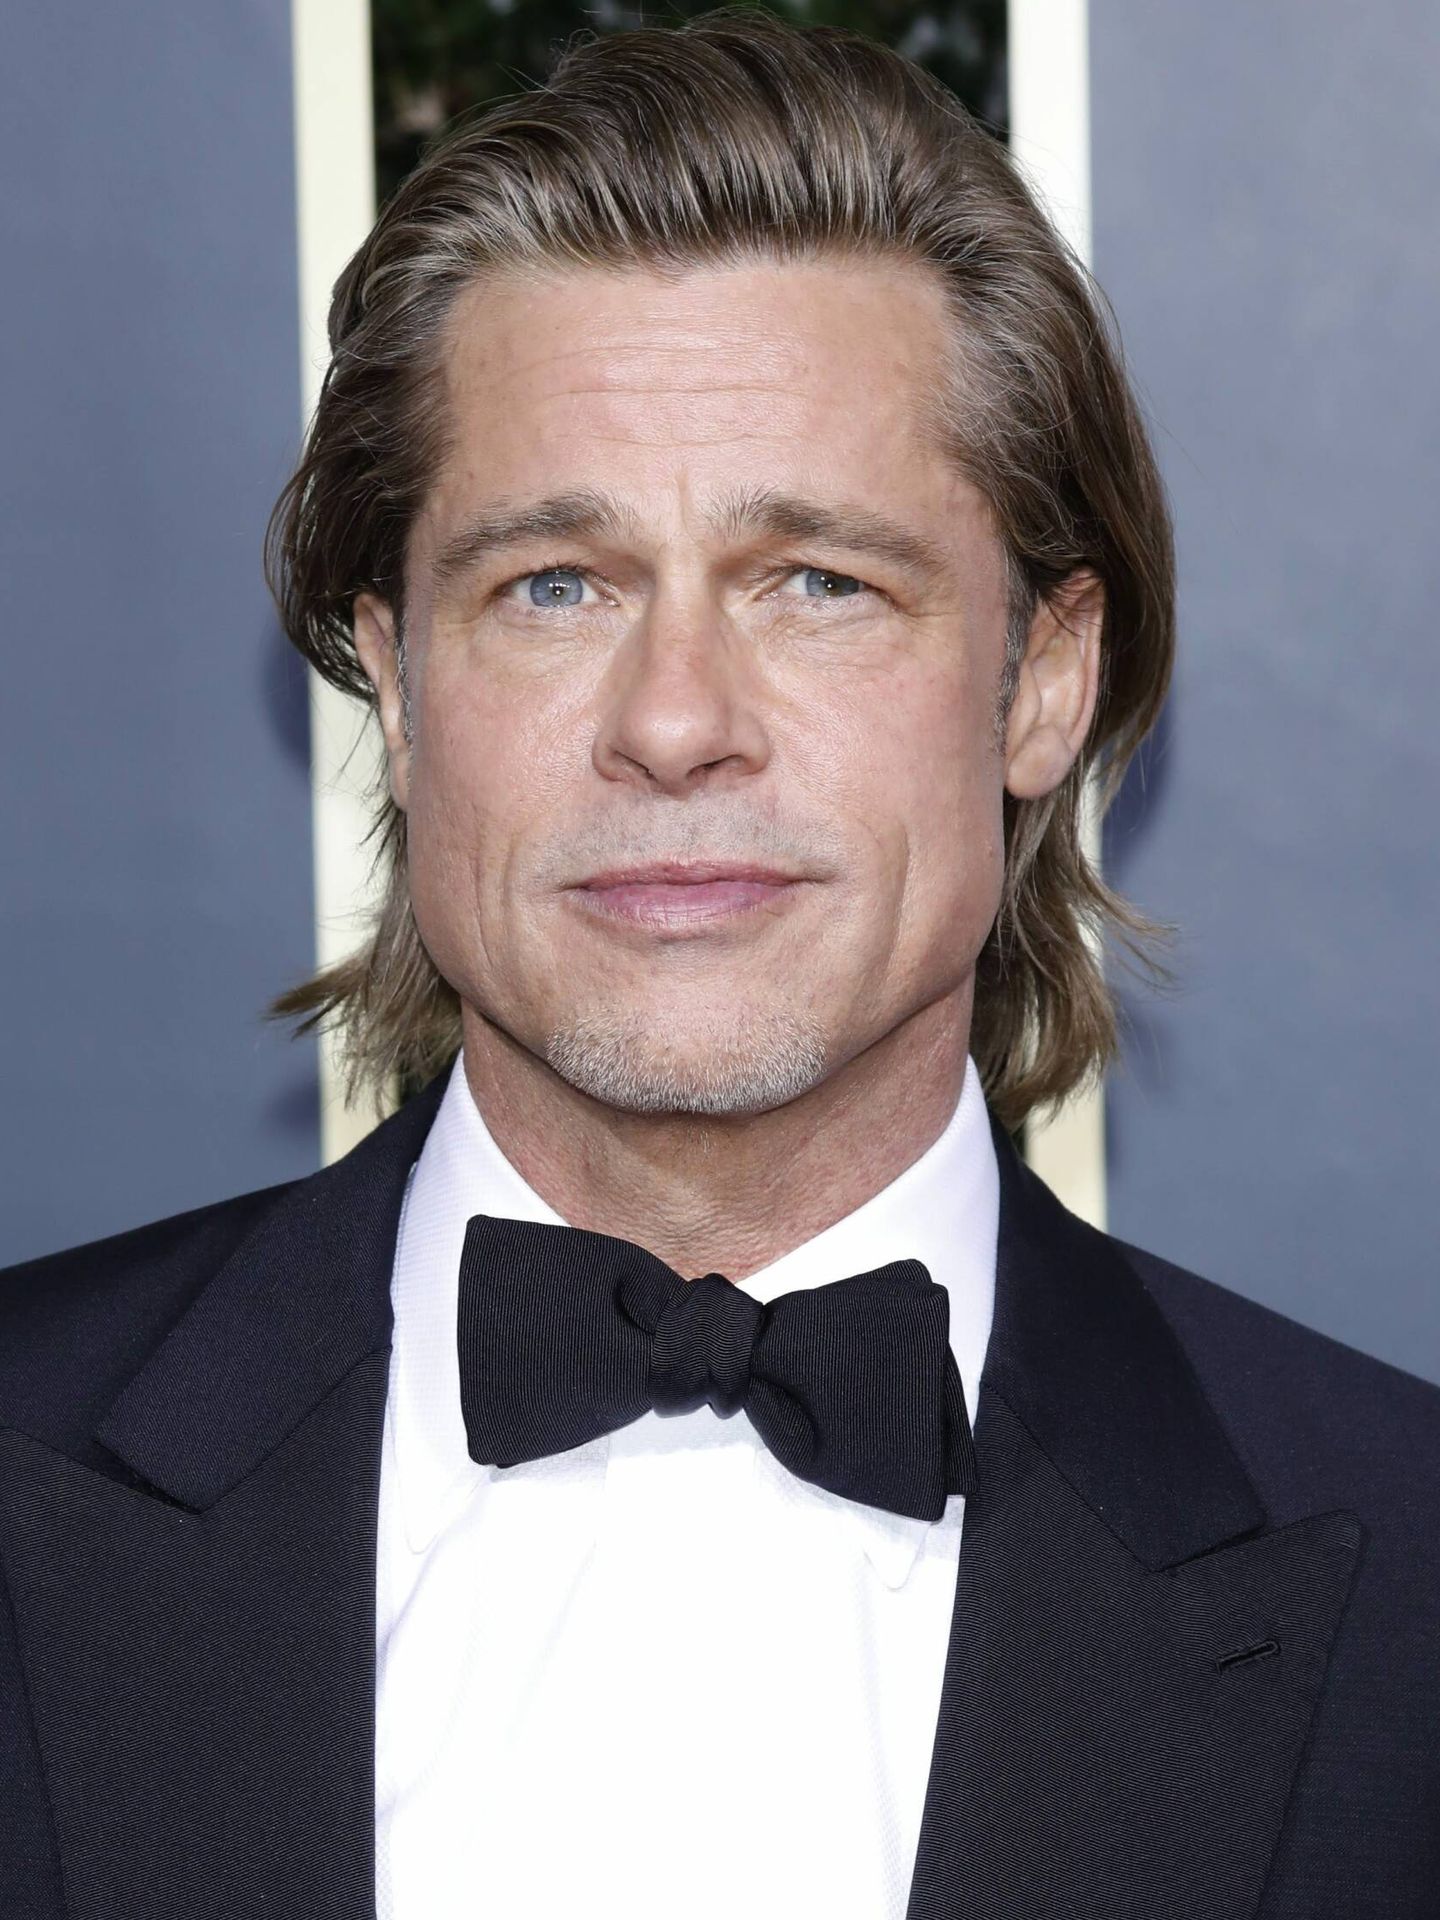 Brad Pitt, en los Oscar de 2020. (Cordon Press/Jennifer Bloc)